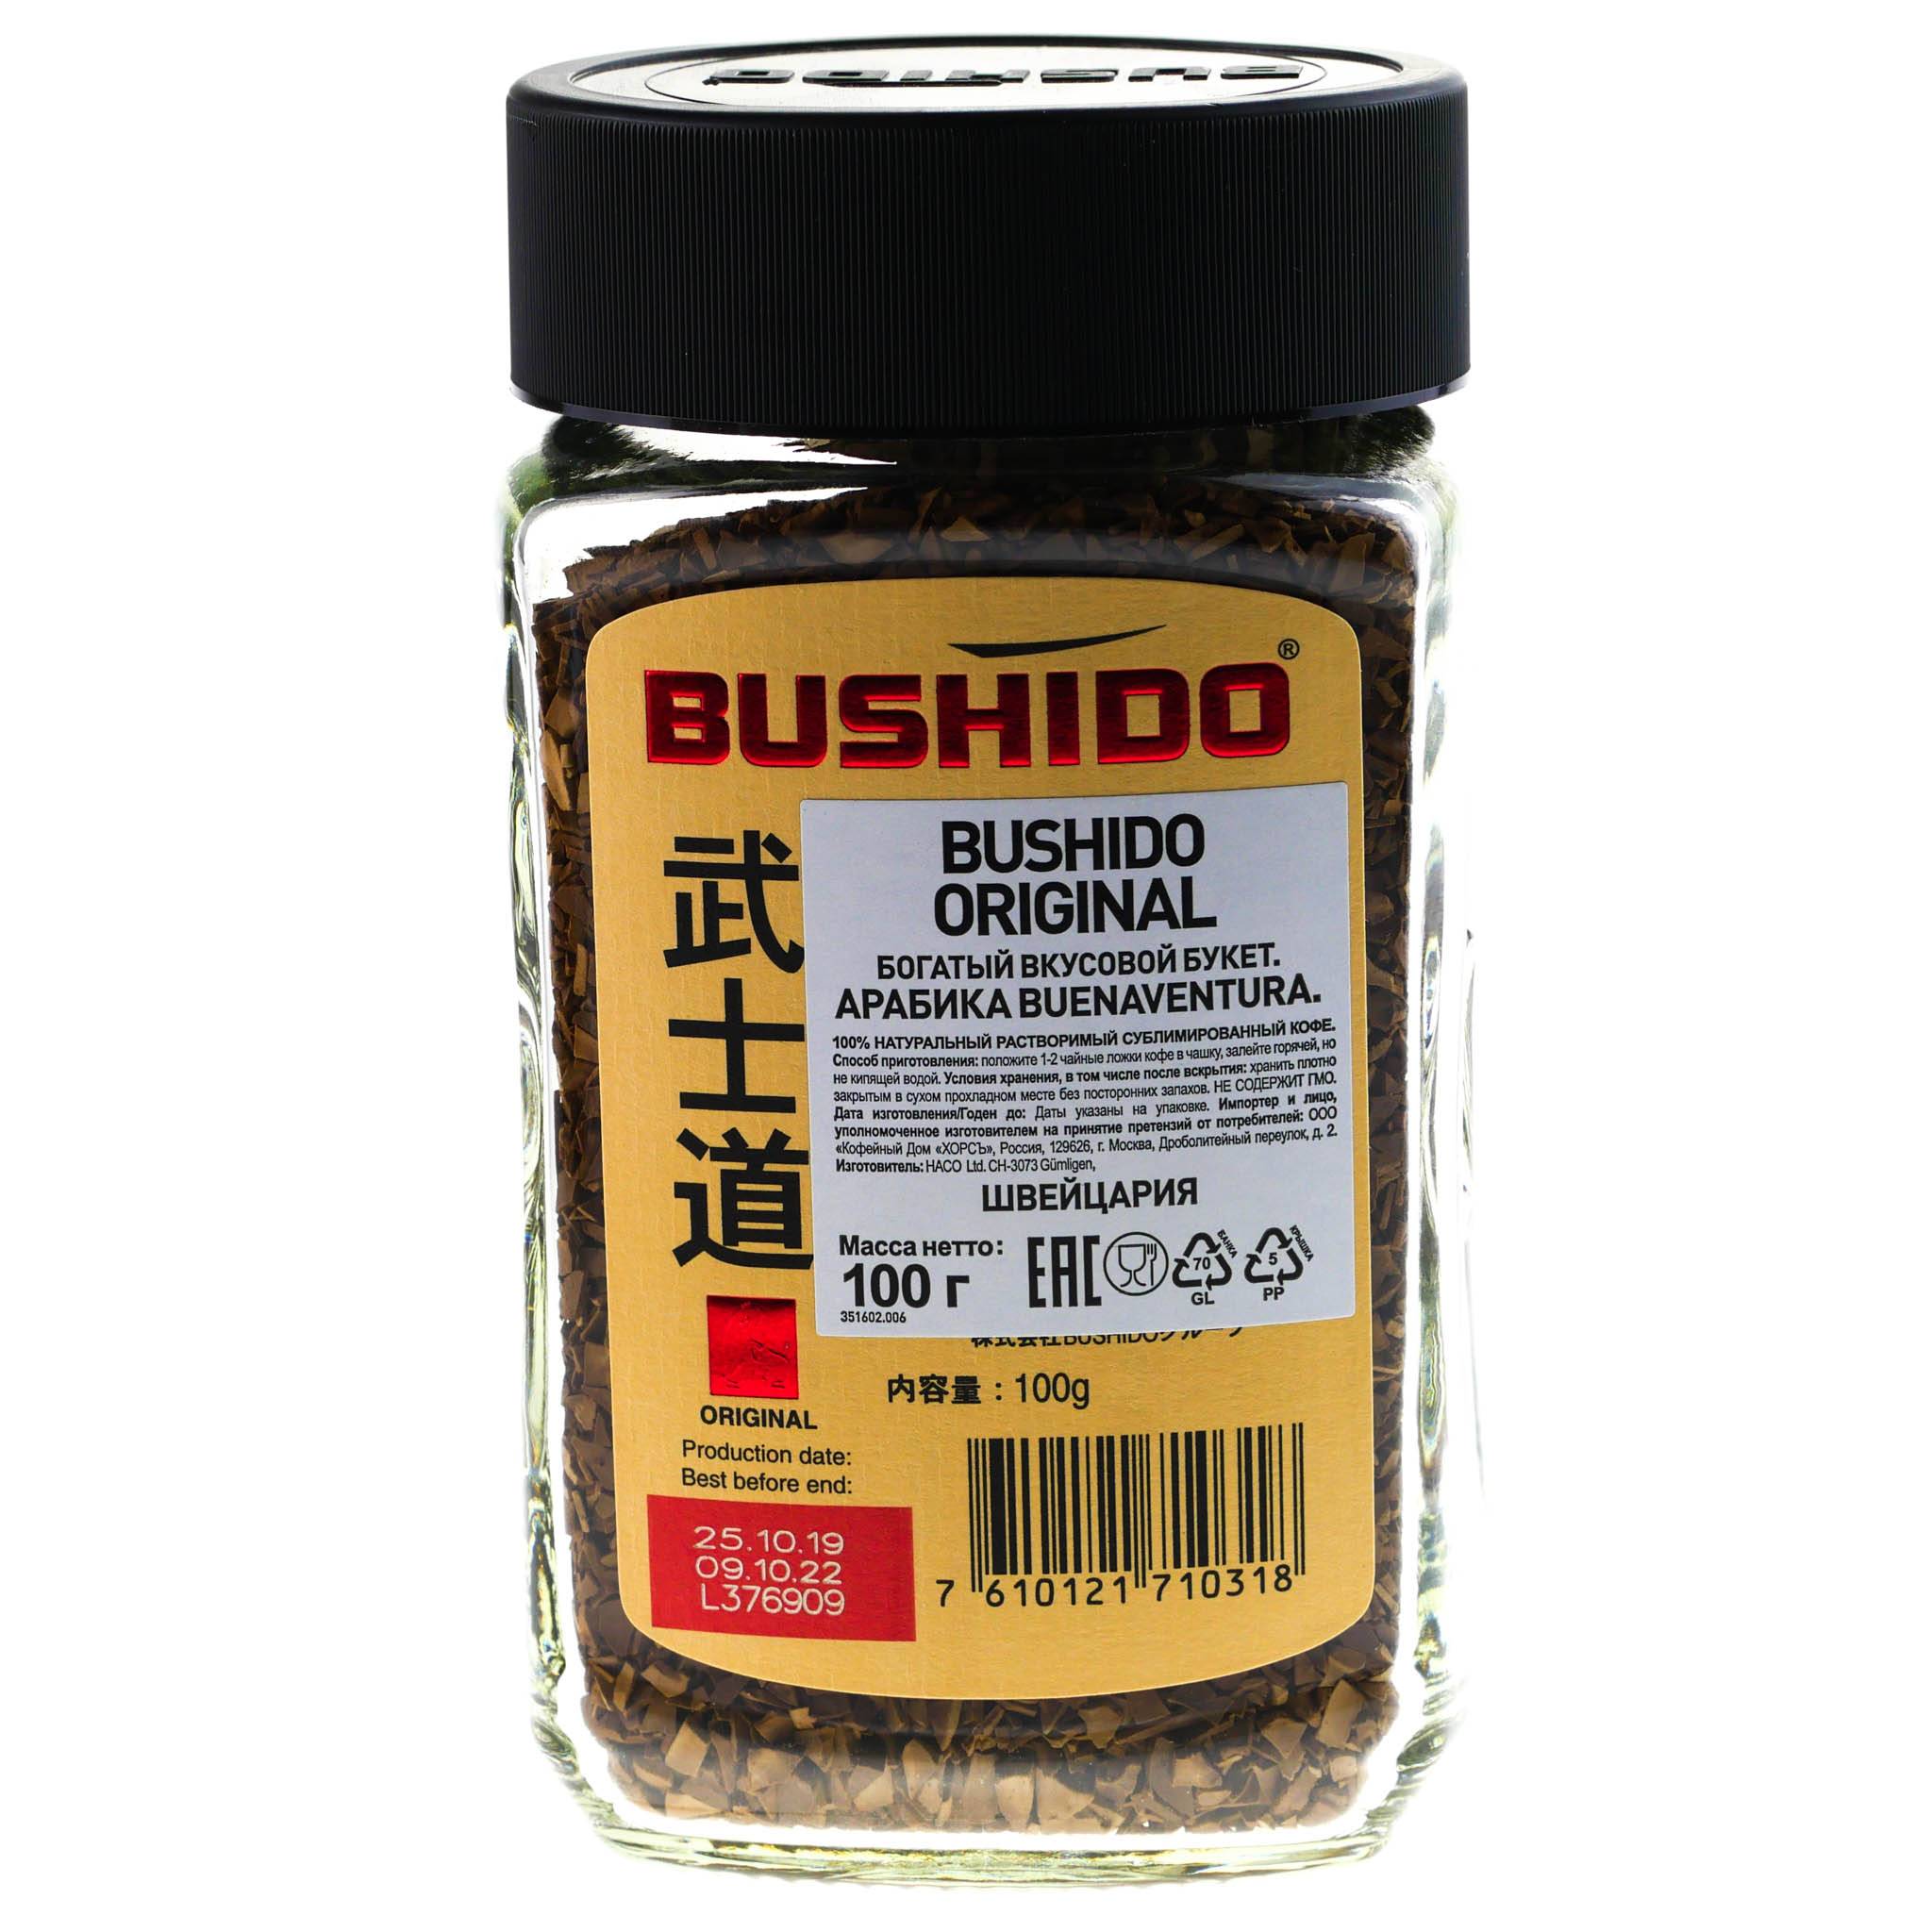 Бушидо: швейцарский кофе с японскими мотивами